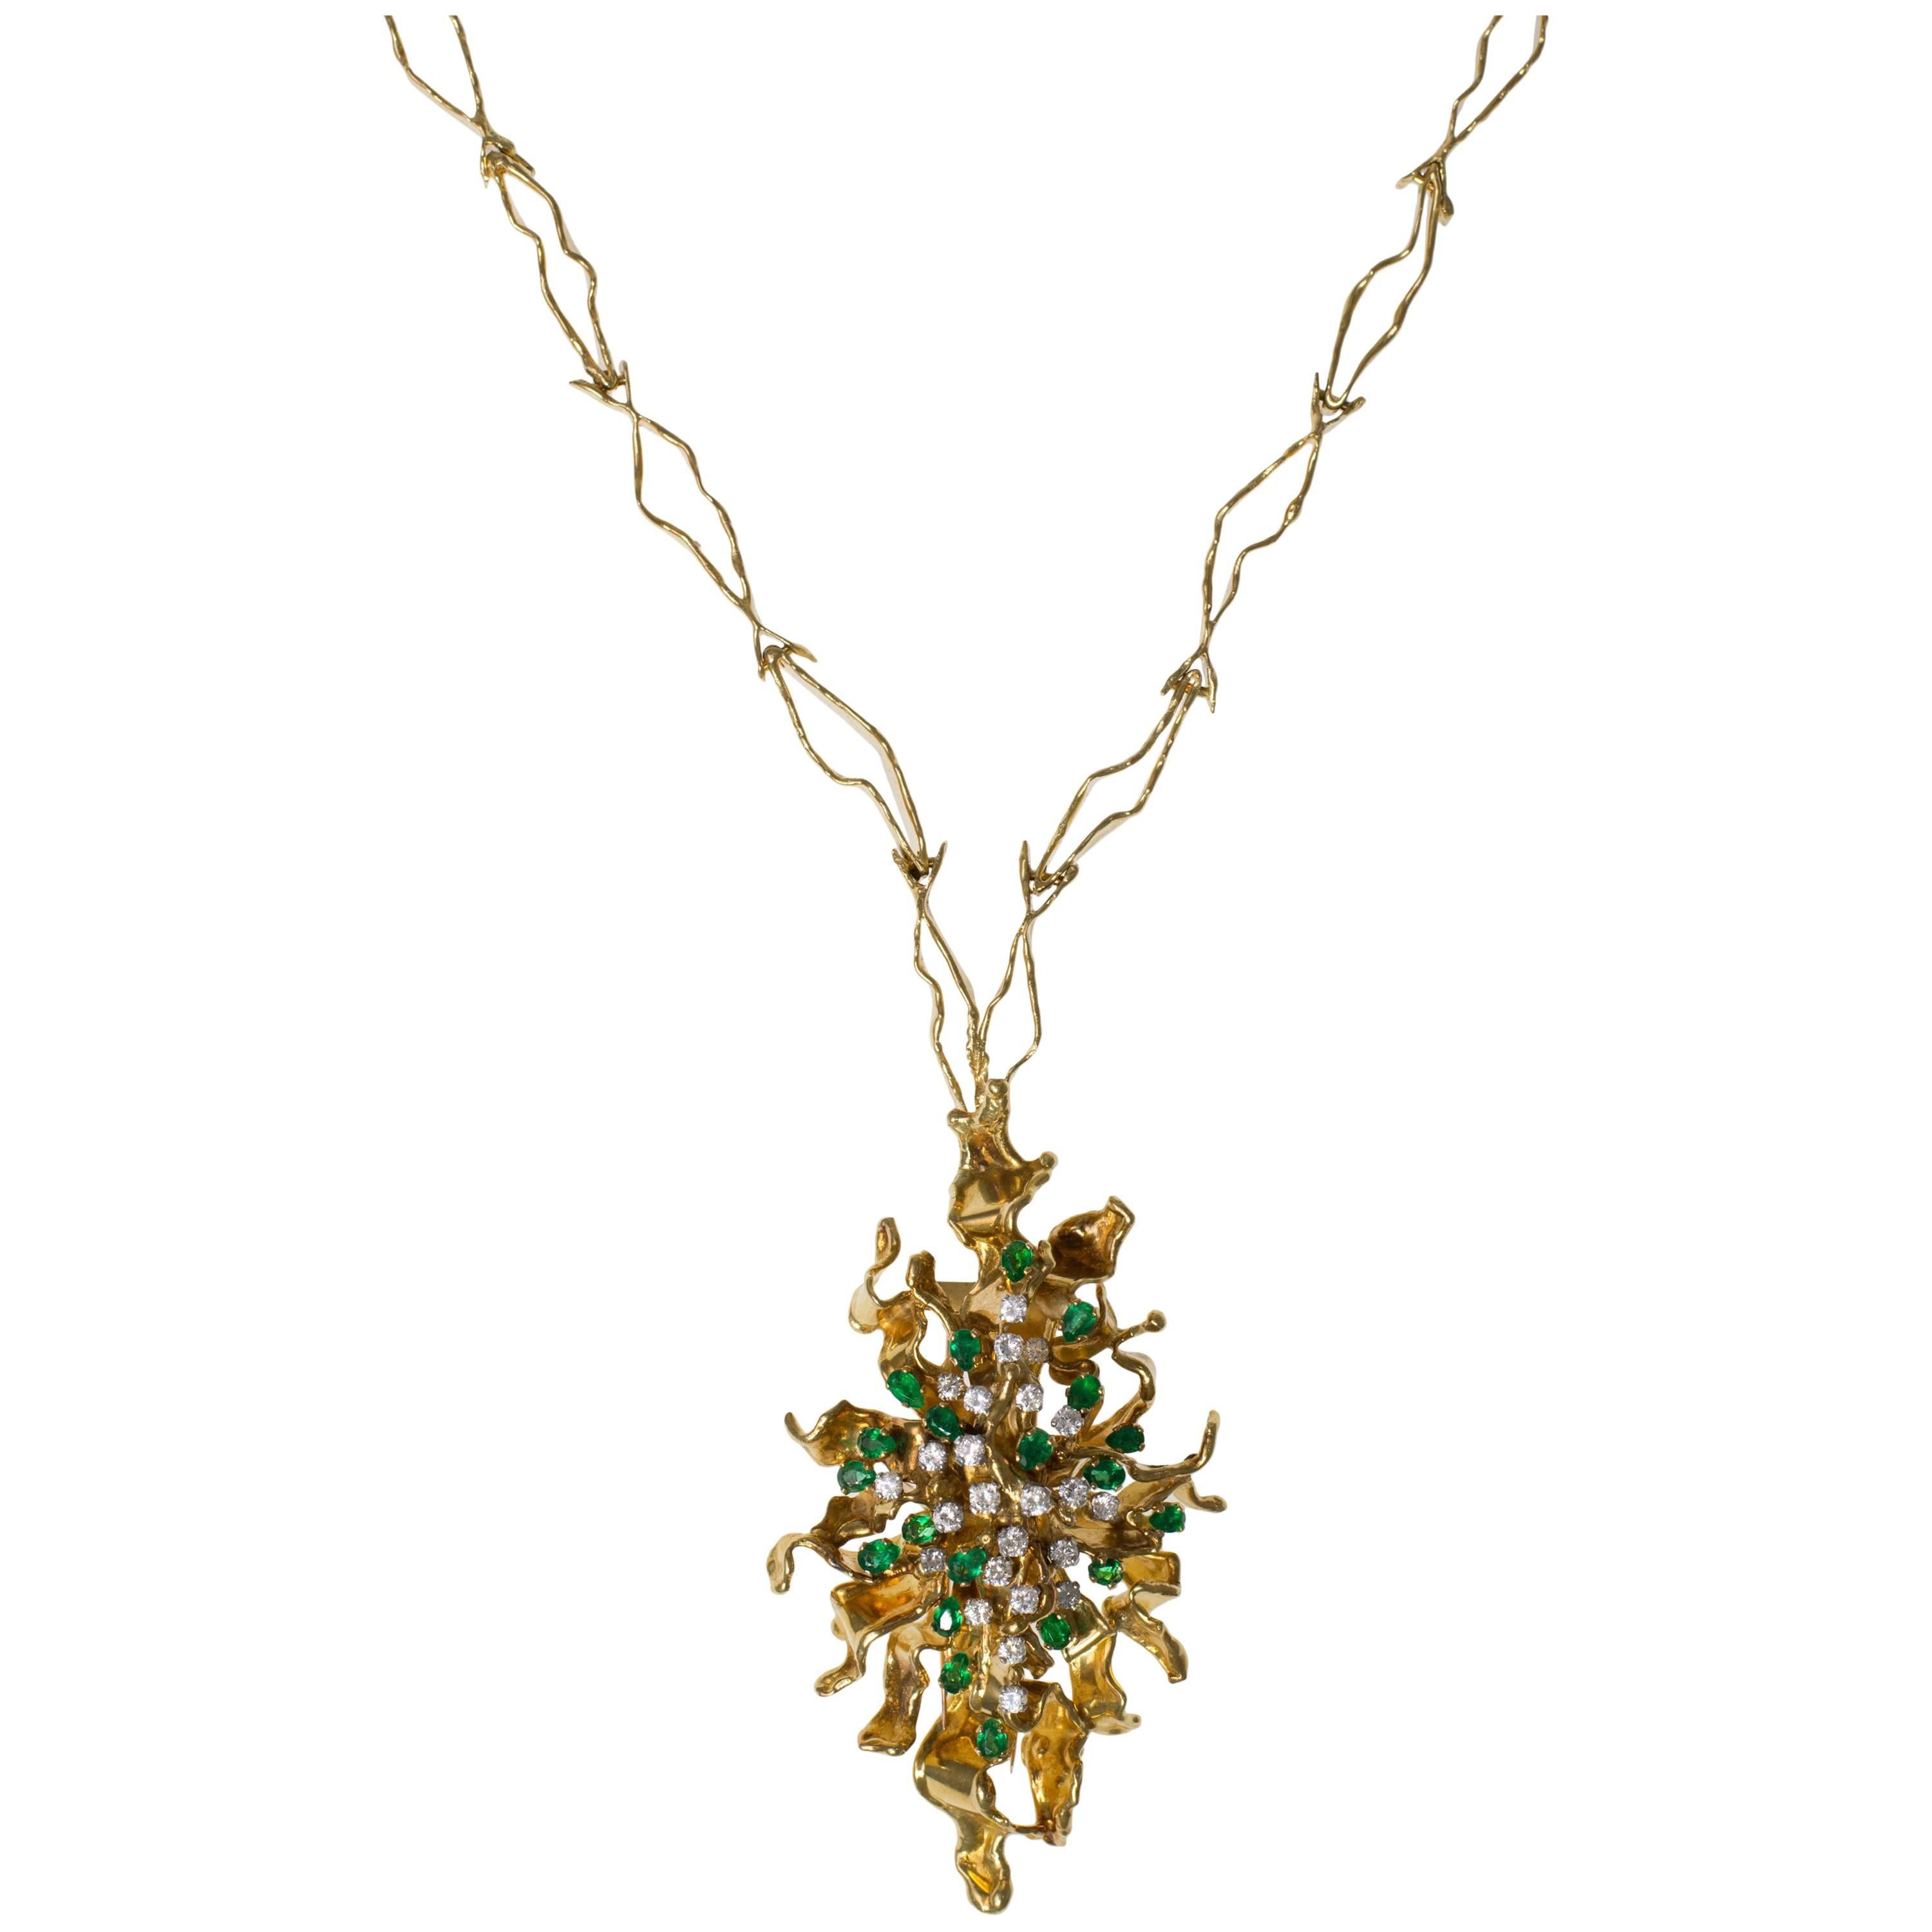 George Weil, Unique Diamond, Emerald, Textured Gold Pendant Necklace